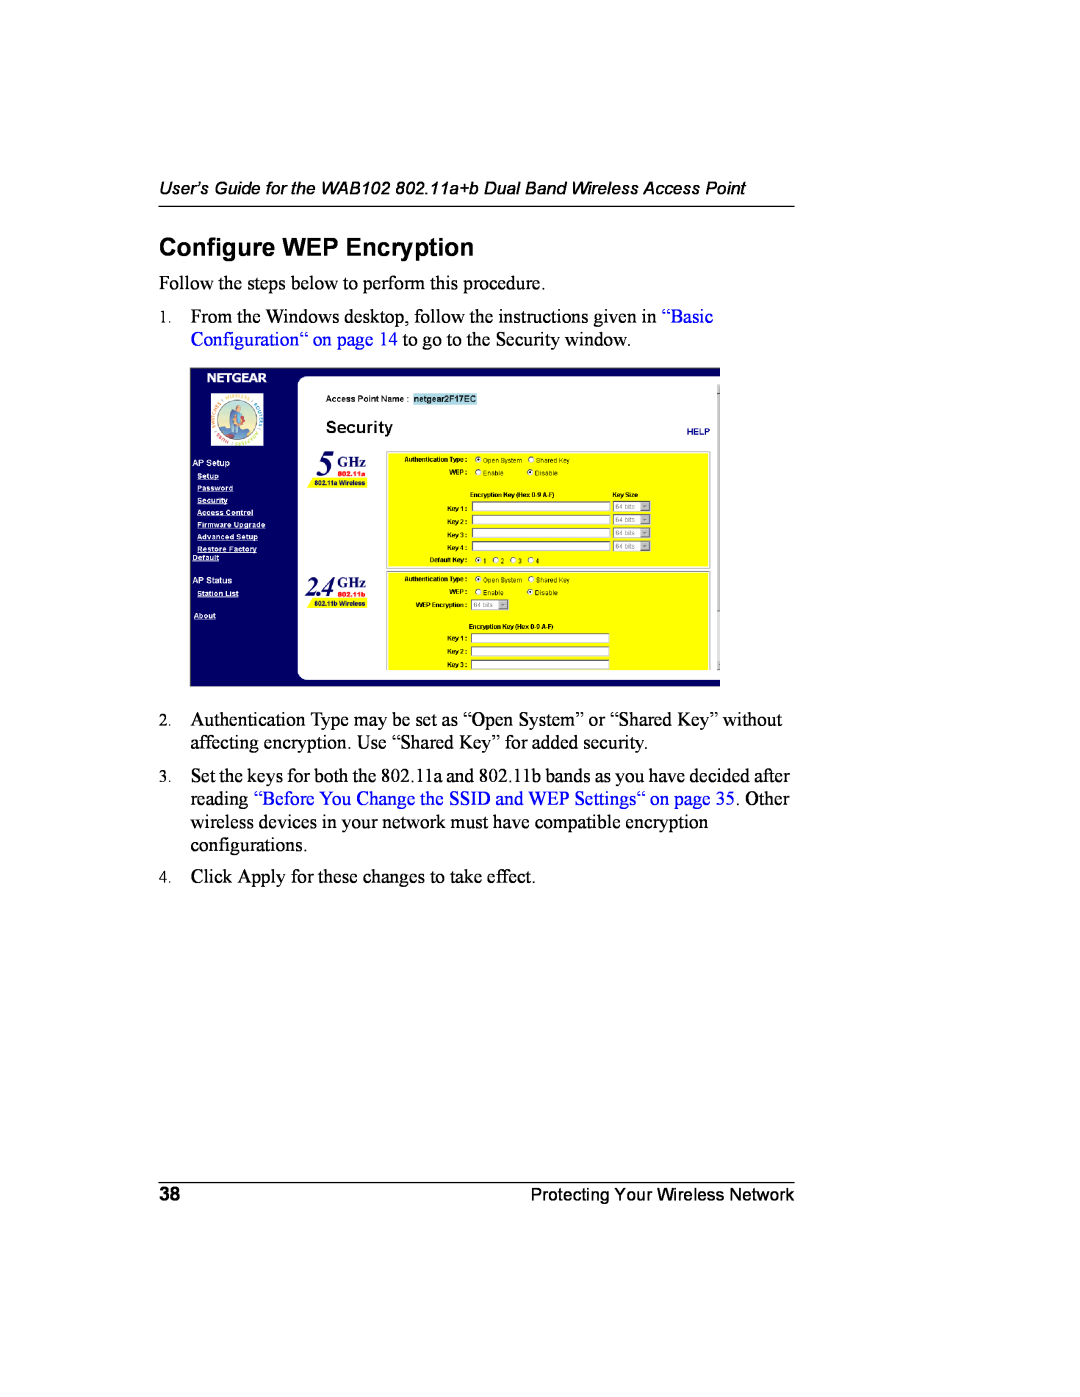 NETGEAR WAB102 manual Configure WEP Encryption 